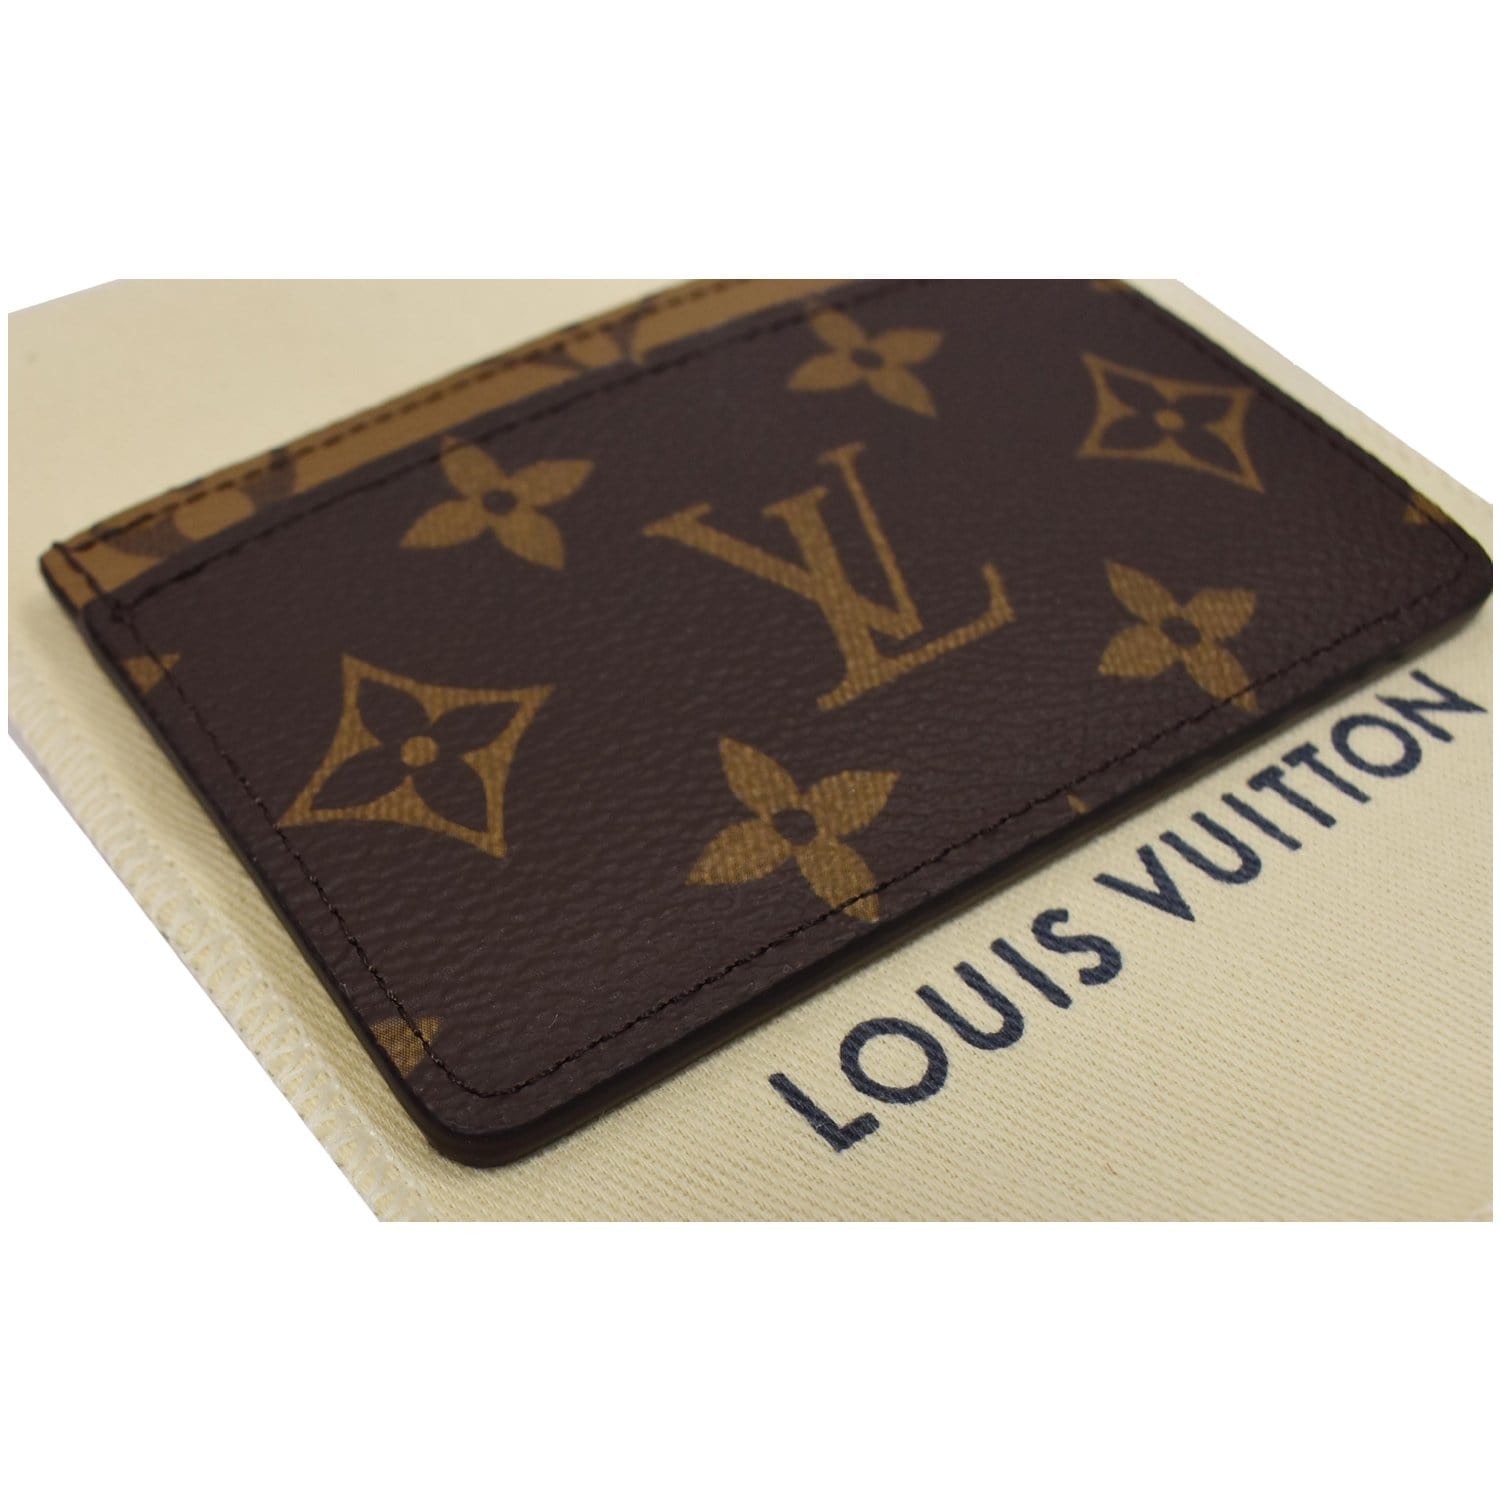 Louis Vuitton Louis Vuitton Wallet Reverse Monogram Card Holder